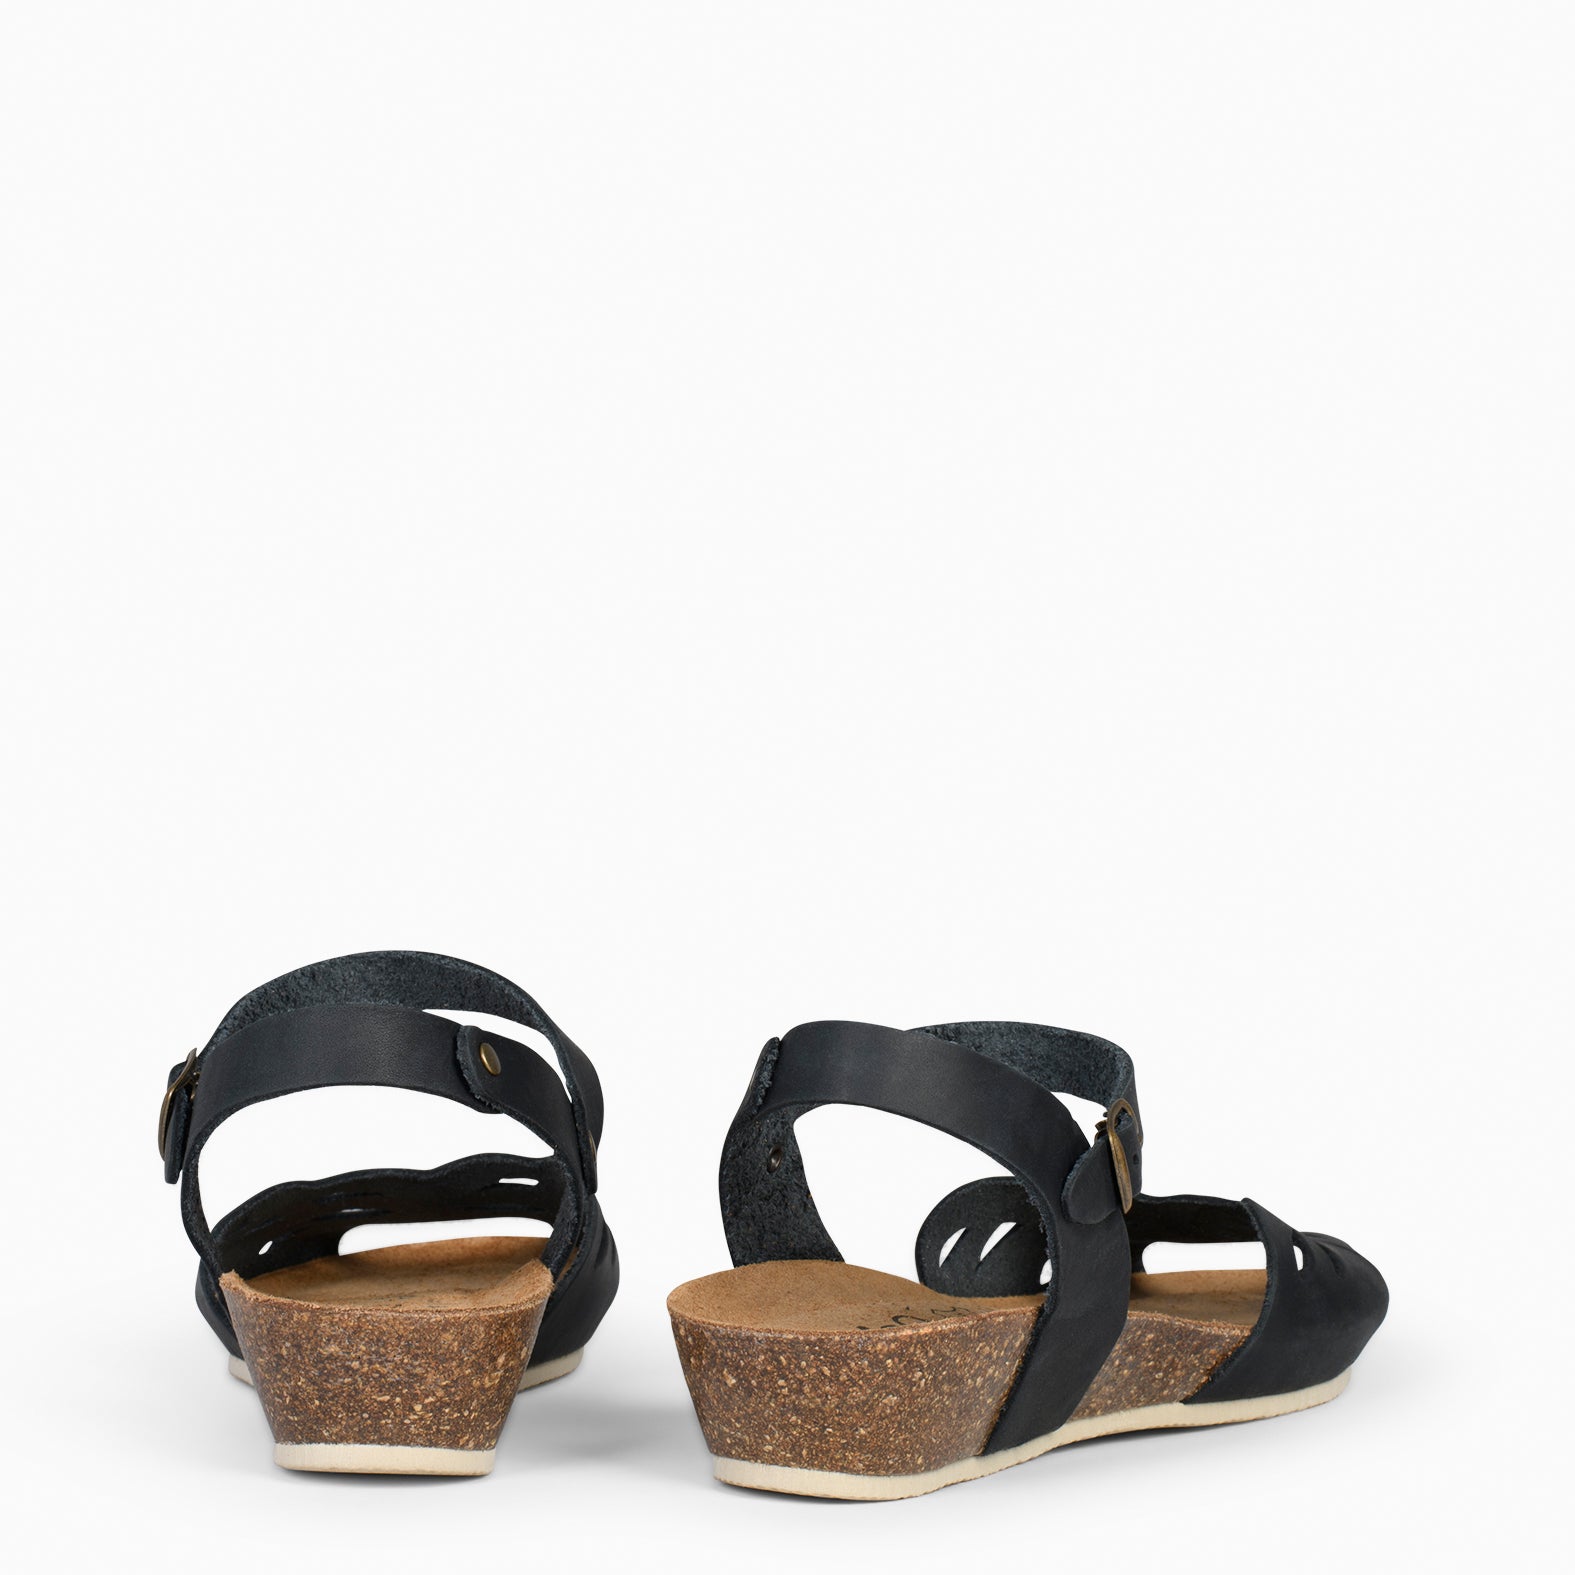 ALOE – BLACK BIO sandals with wedge